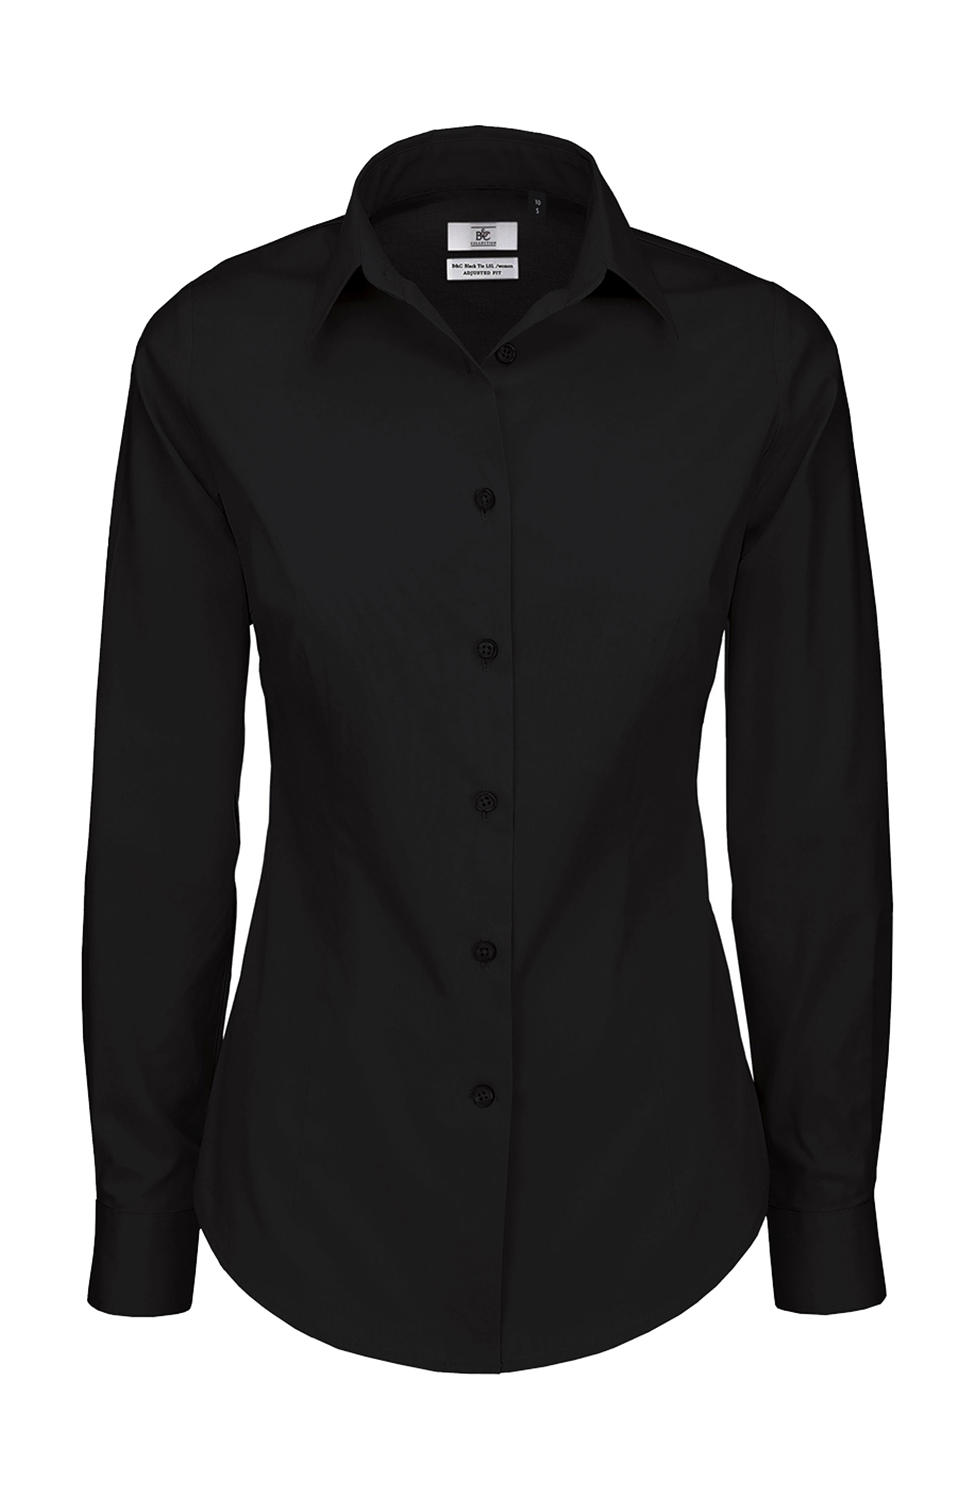  Black Tie LSL/women Poplin Shirt in Farbe Black